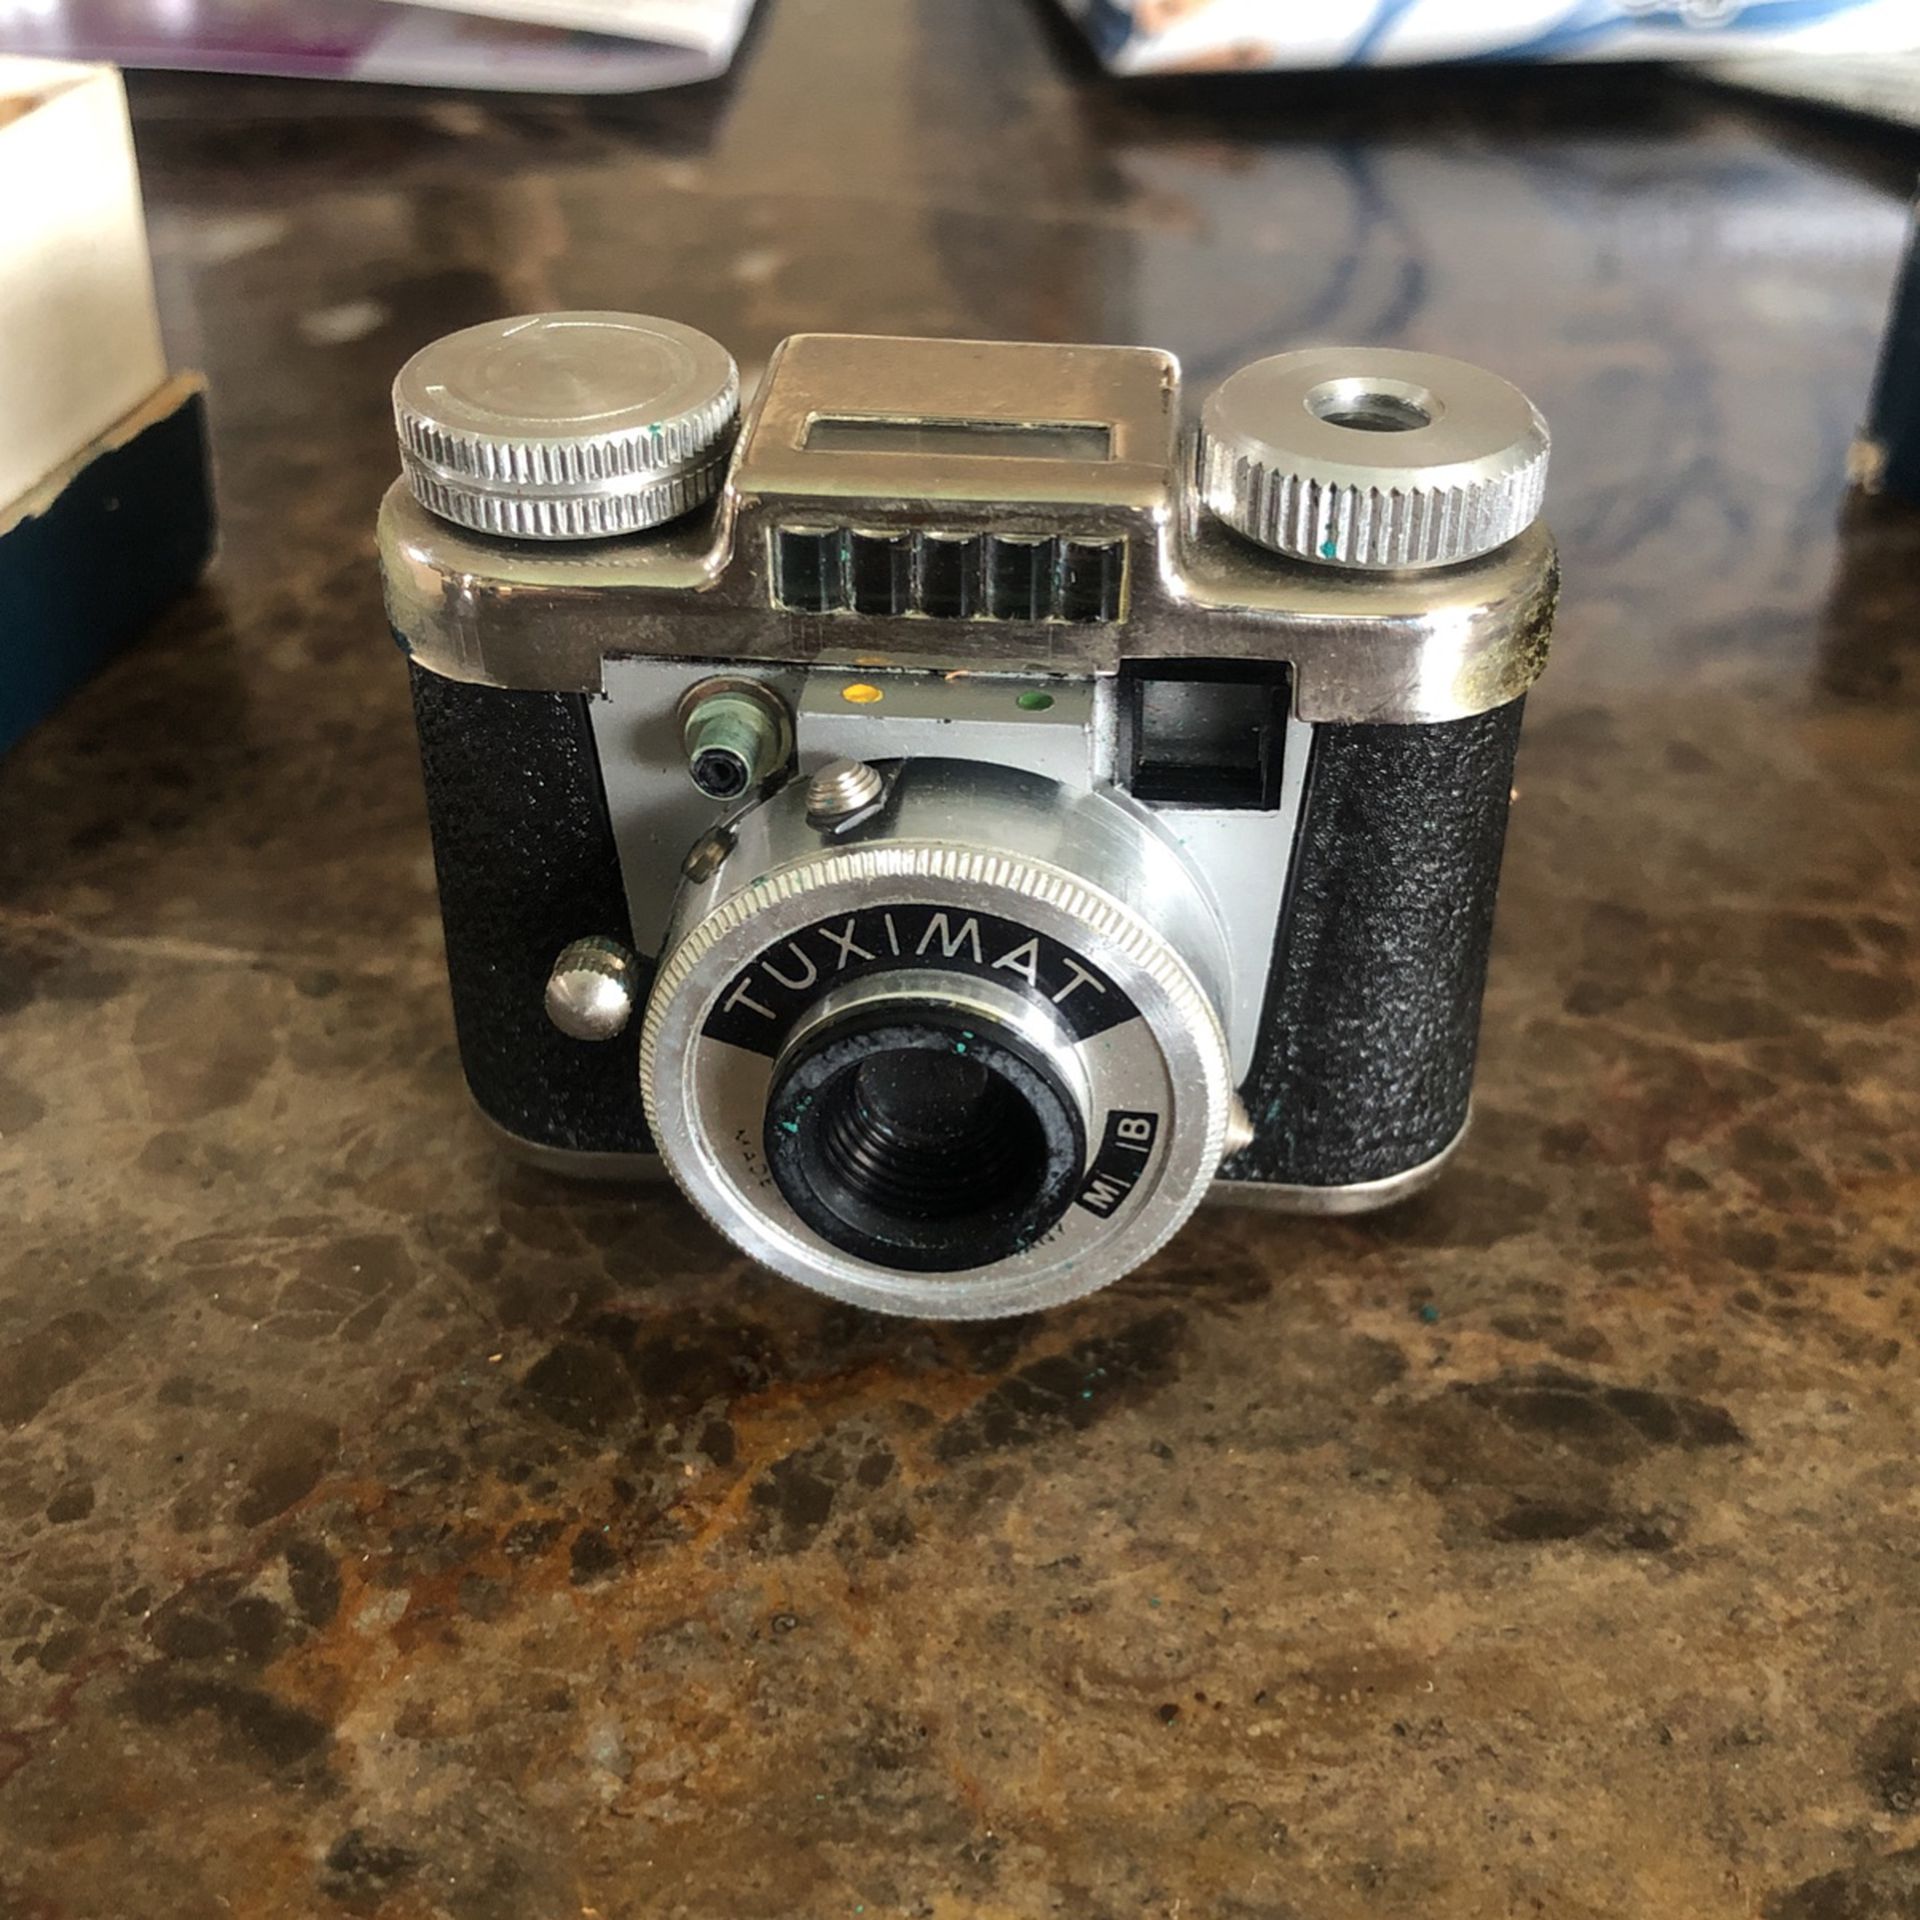 Camera 1959 Tuximat Miniature Spy